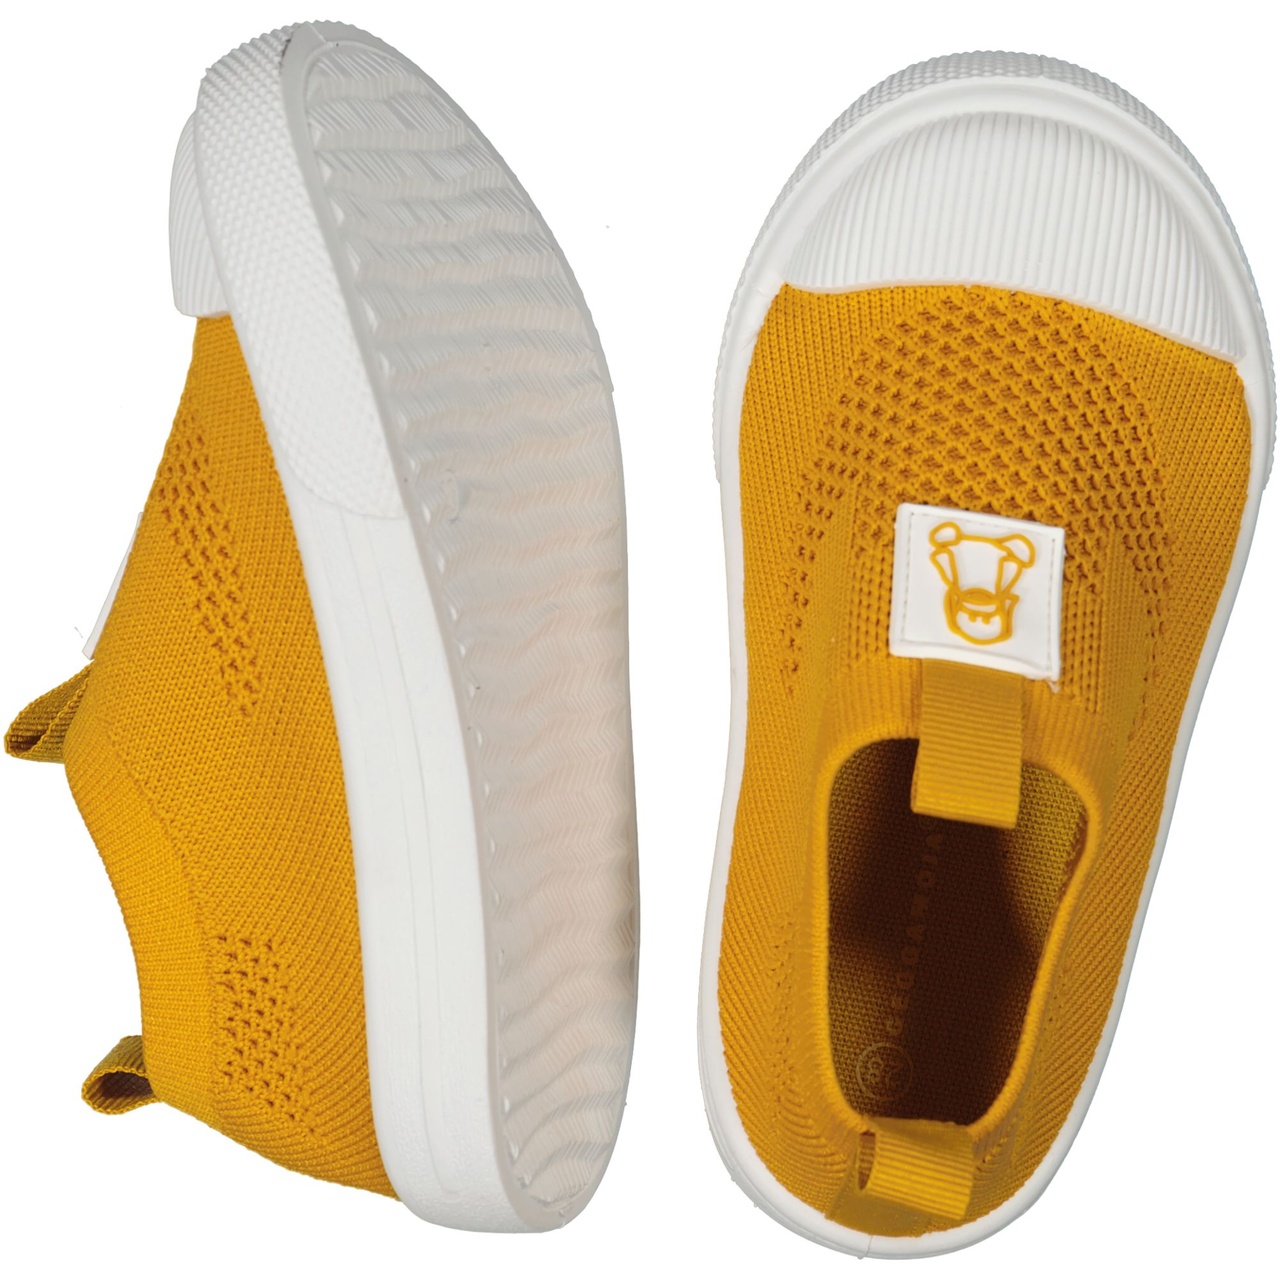 Stretch shoe Yellow 27